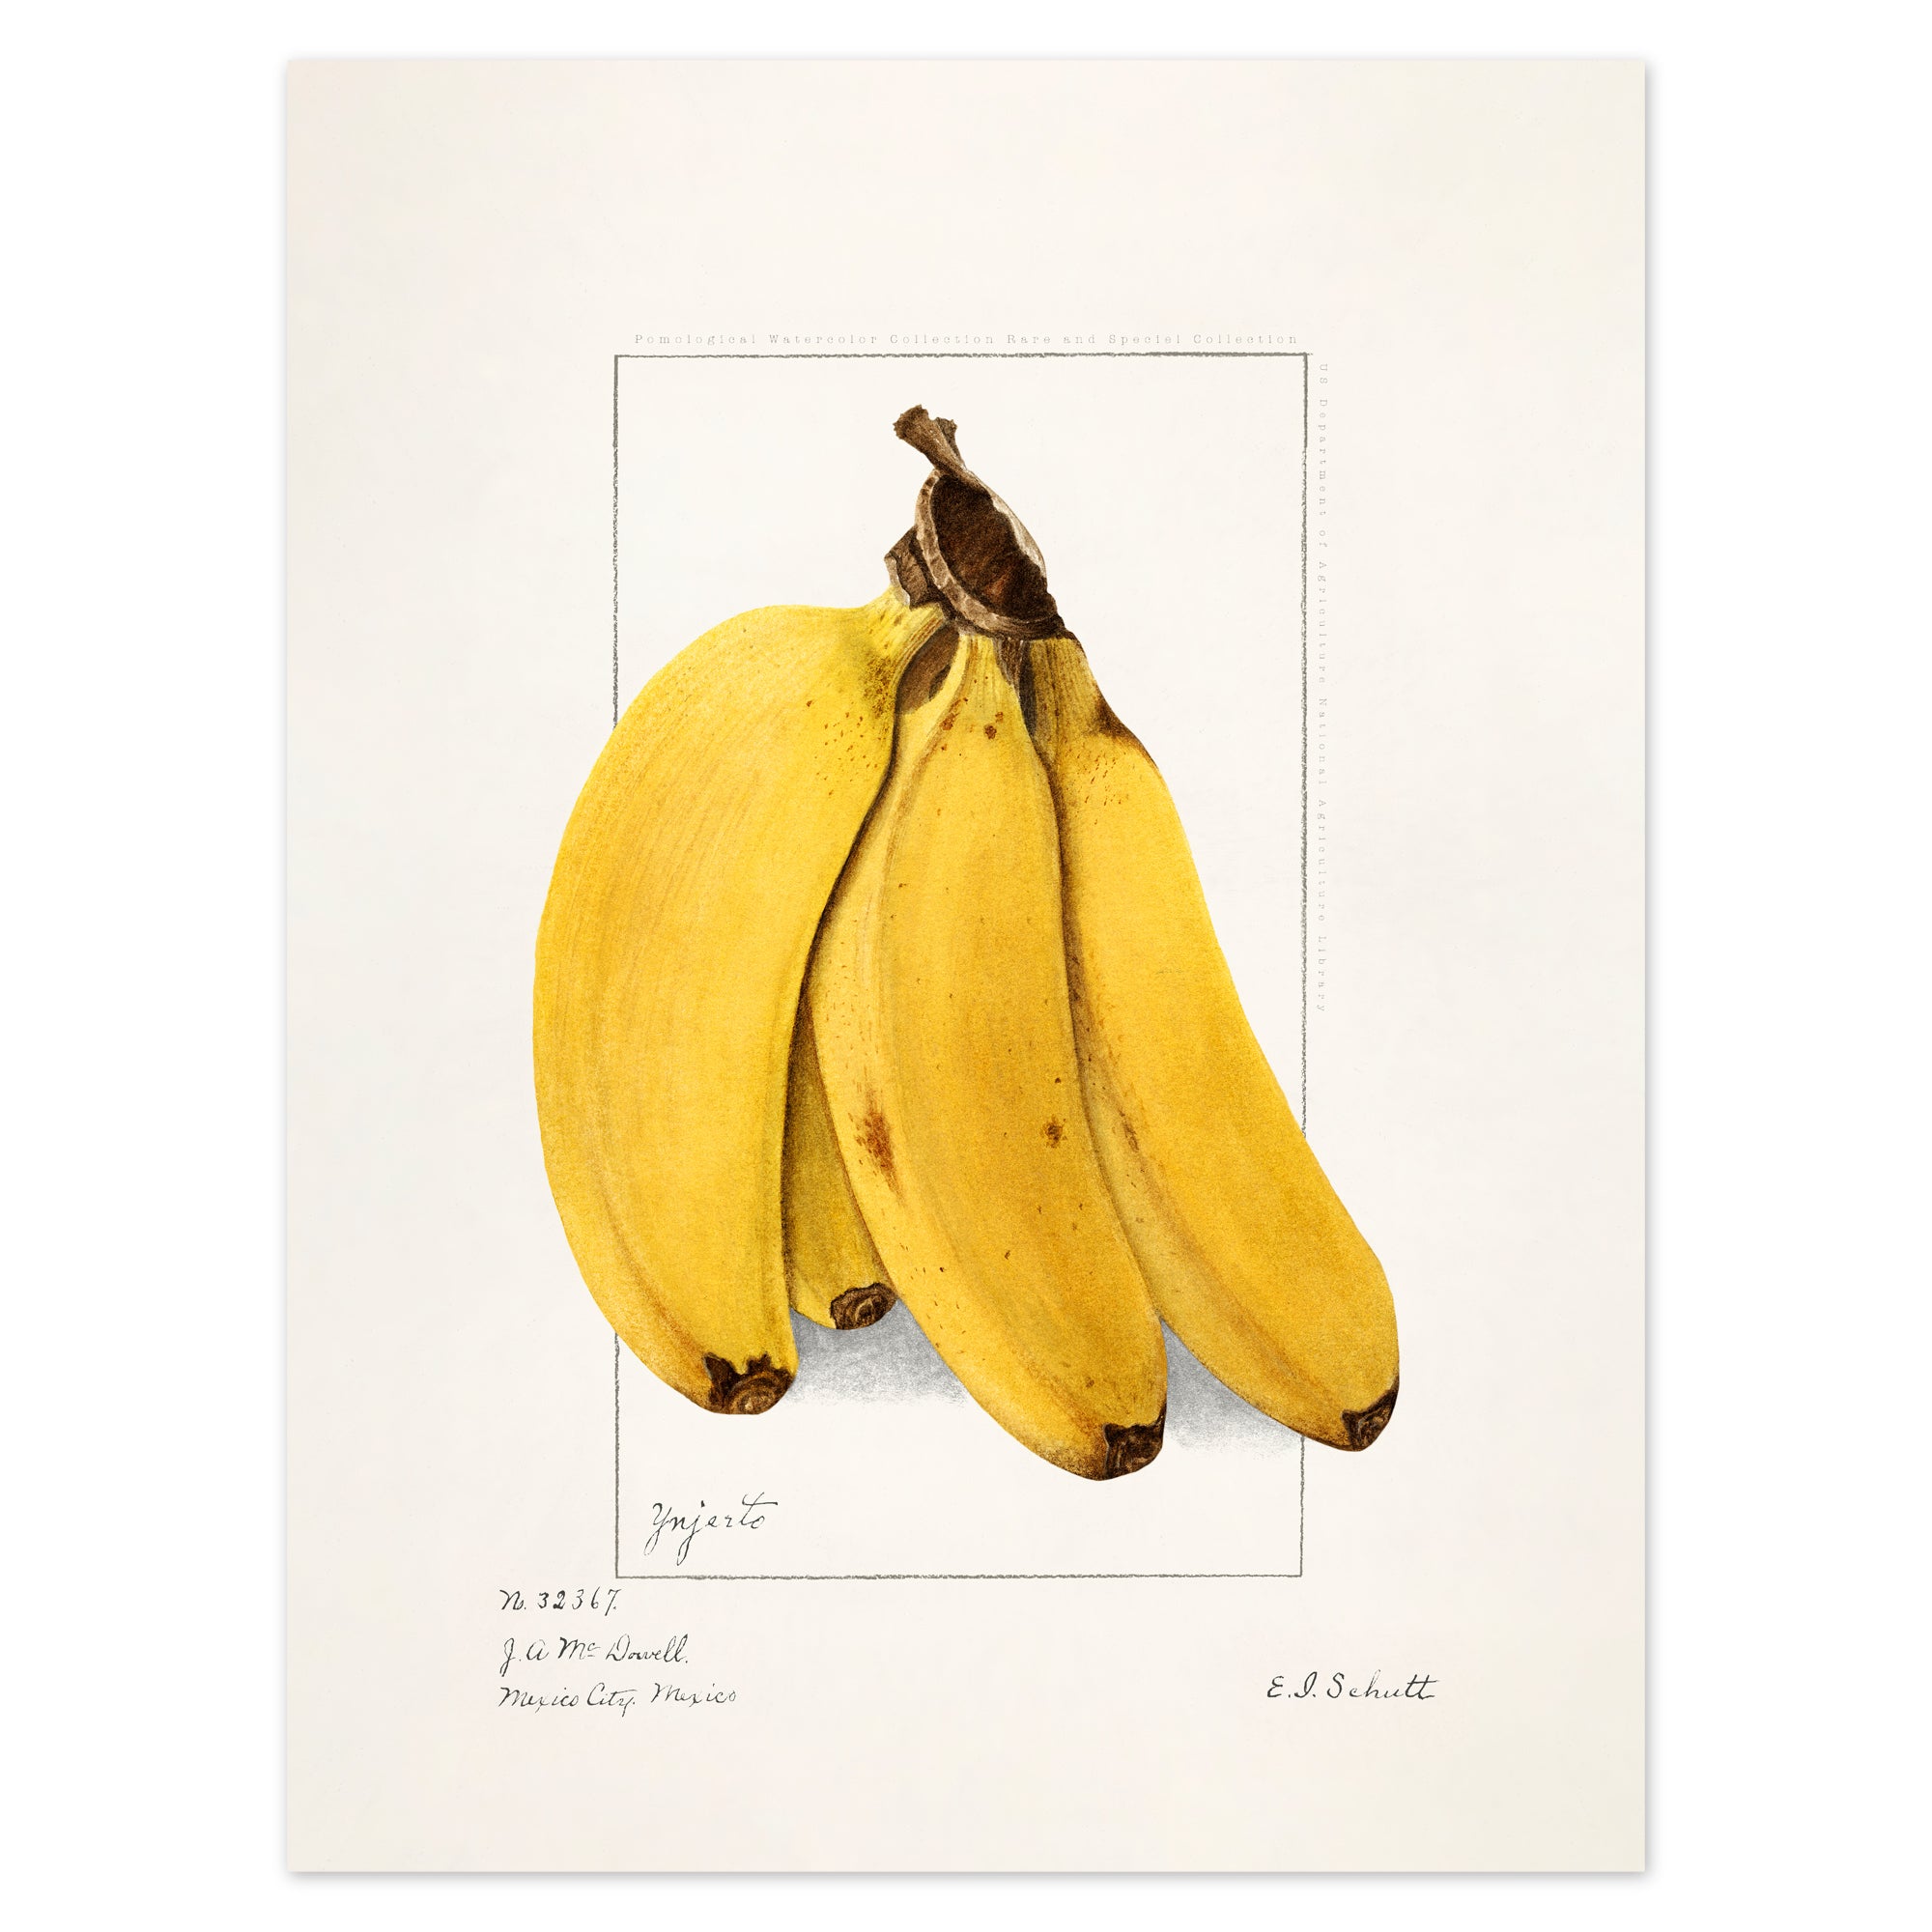 Hand of Bananas Poster